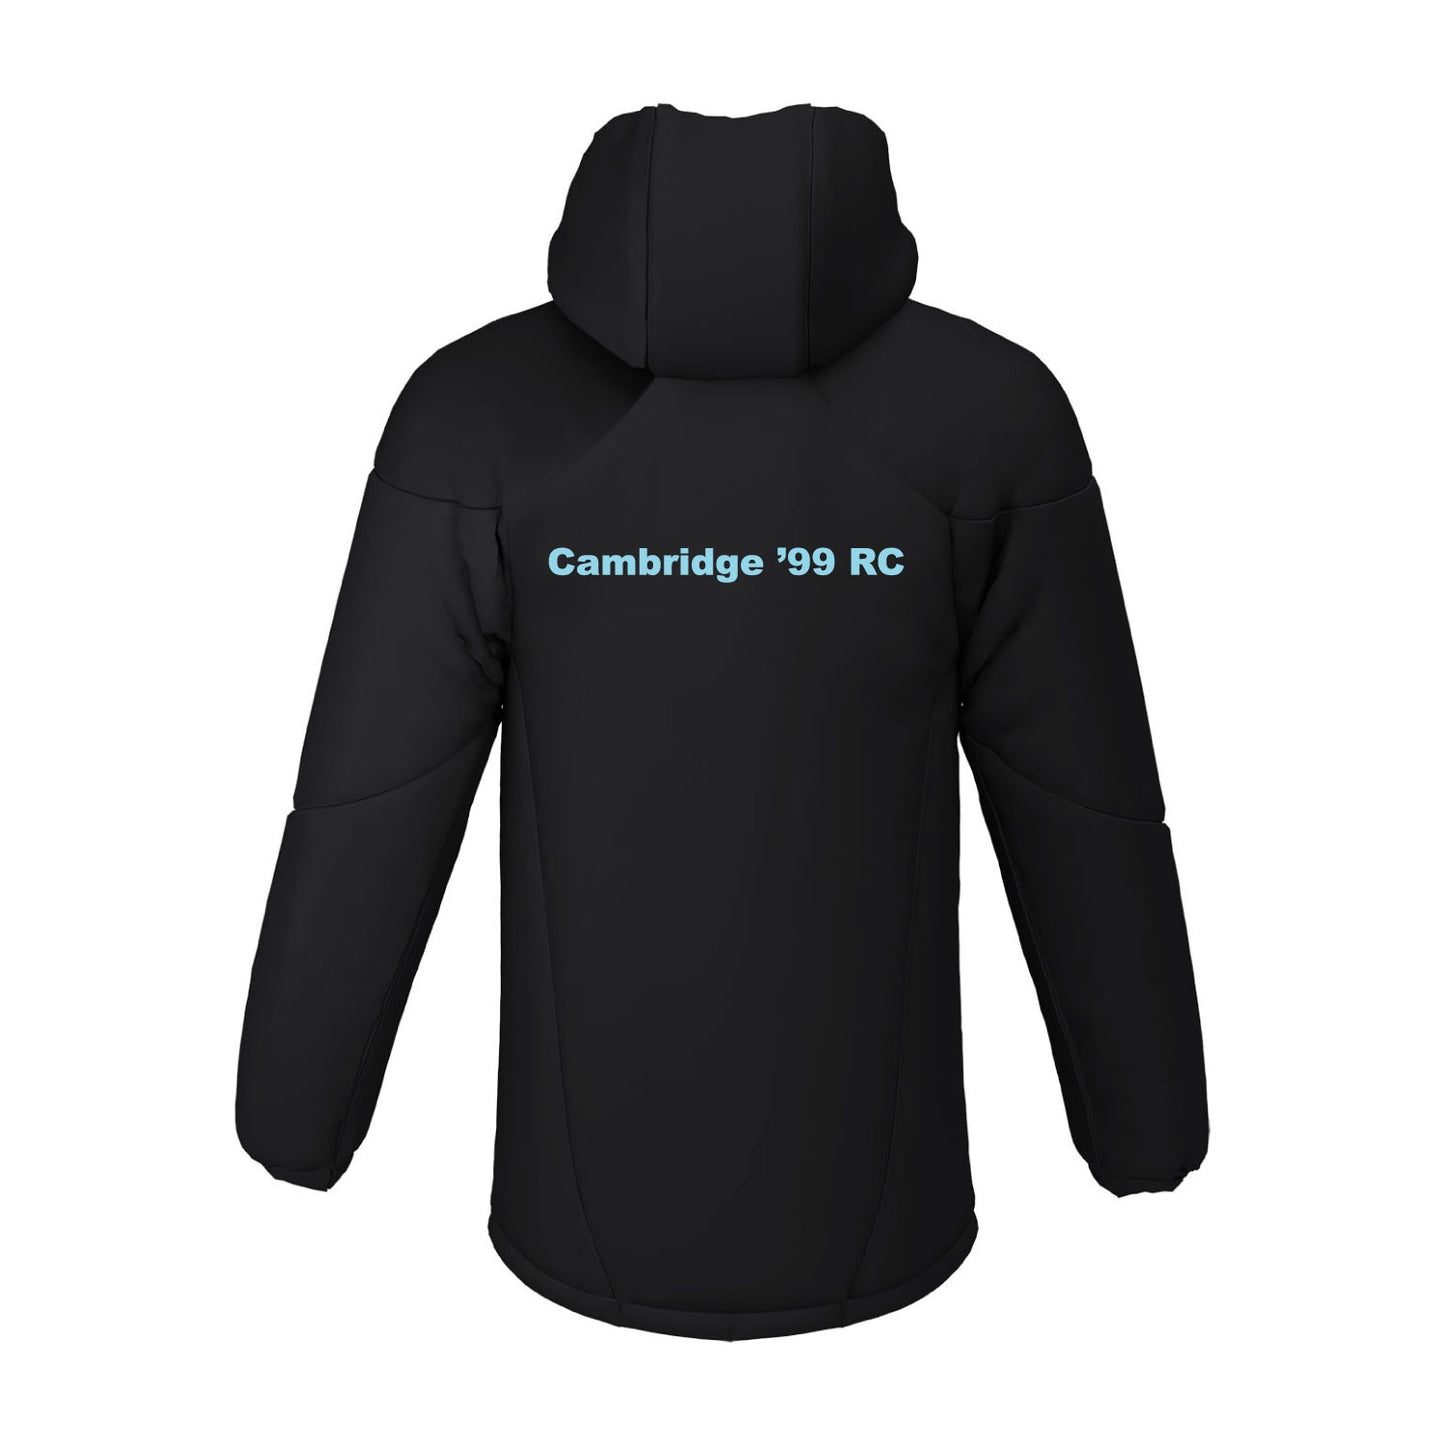 Cambridge '99 Contoured Thermal Jacket